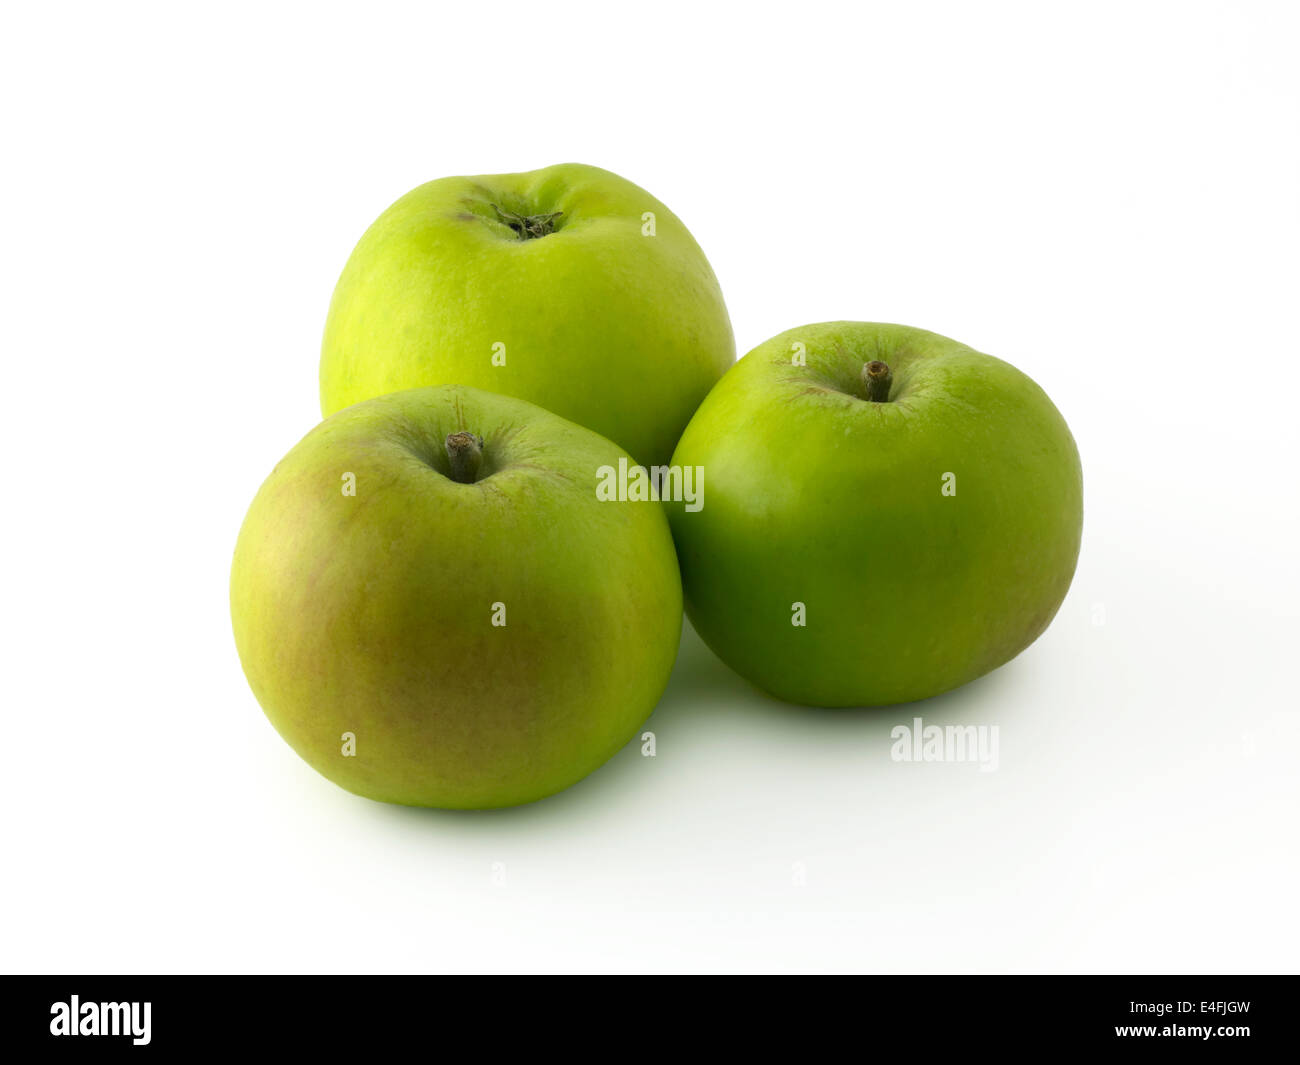 bramley apples Stock Photo